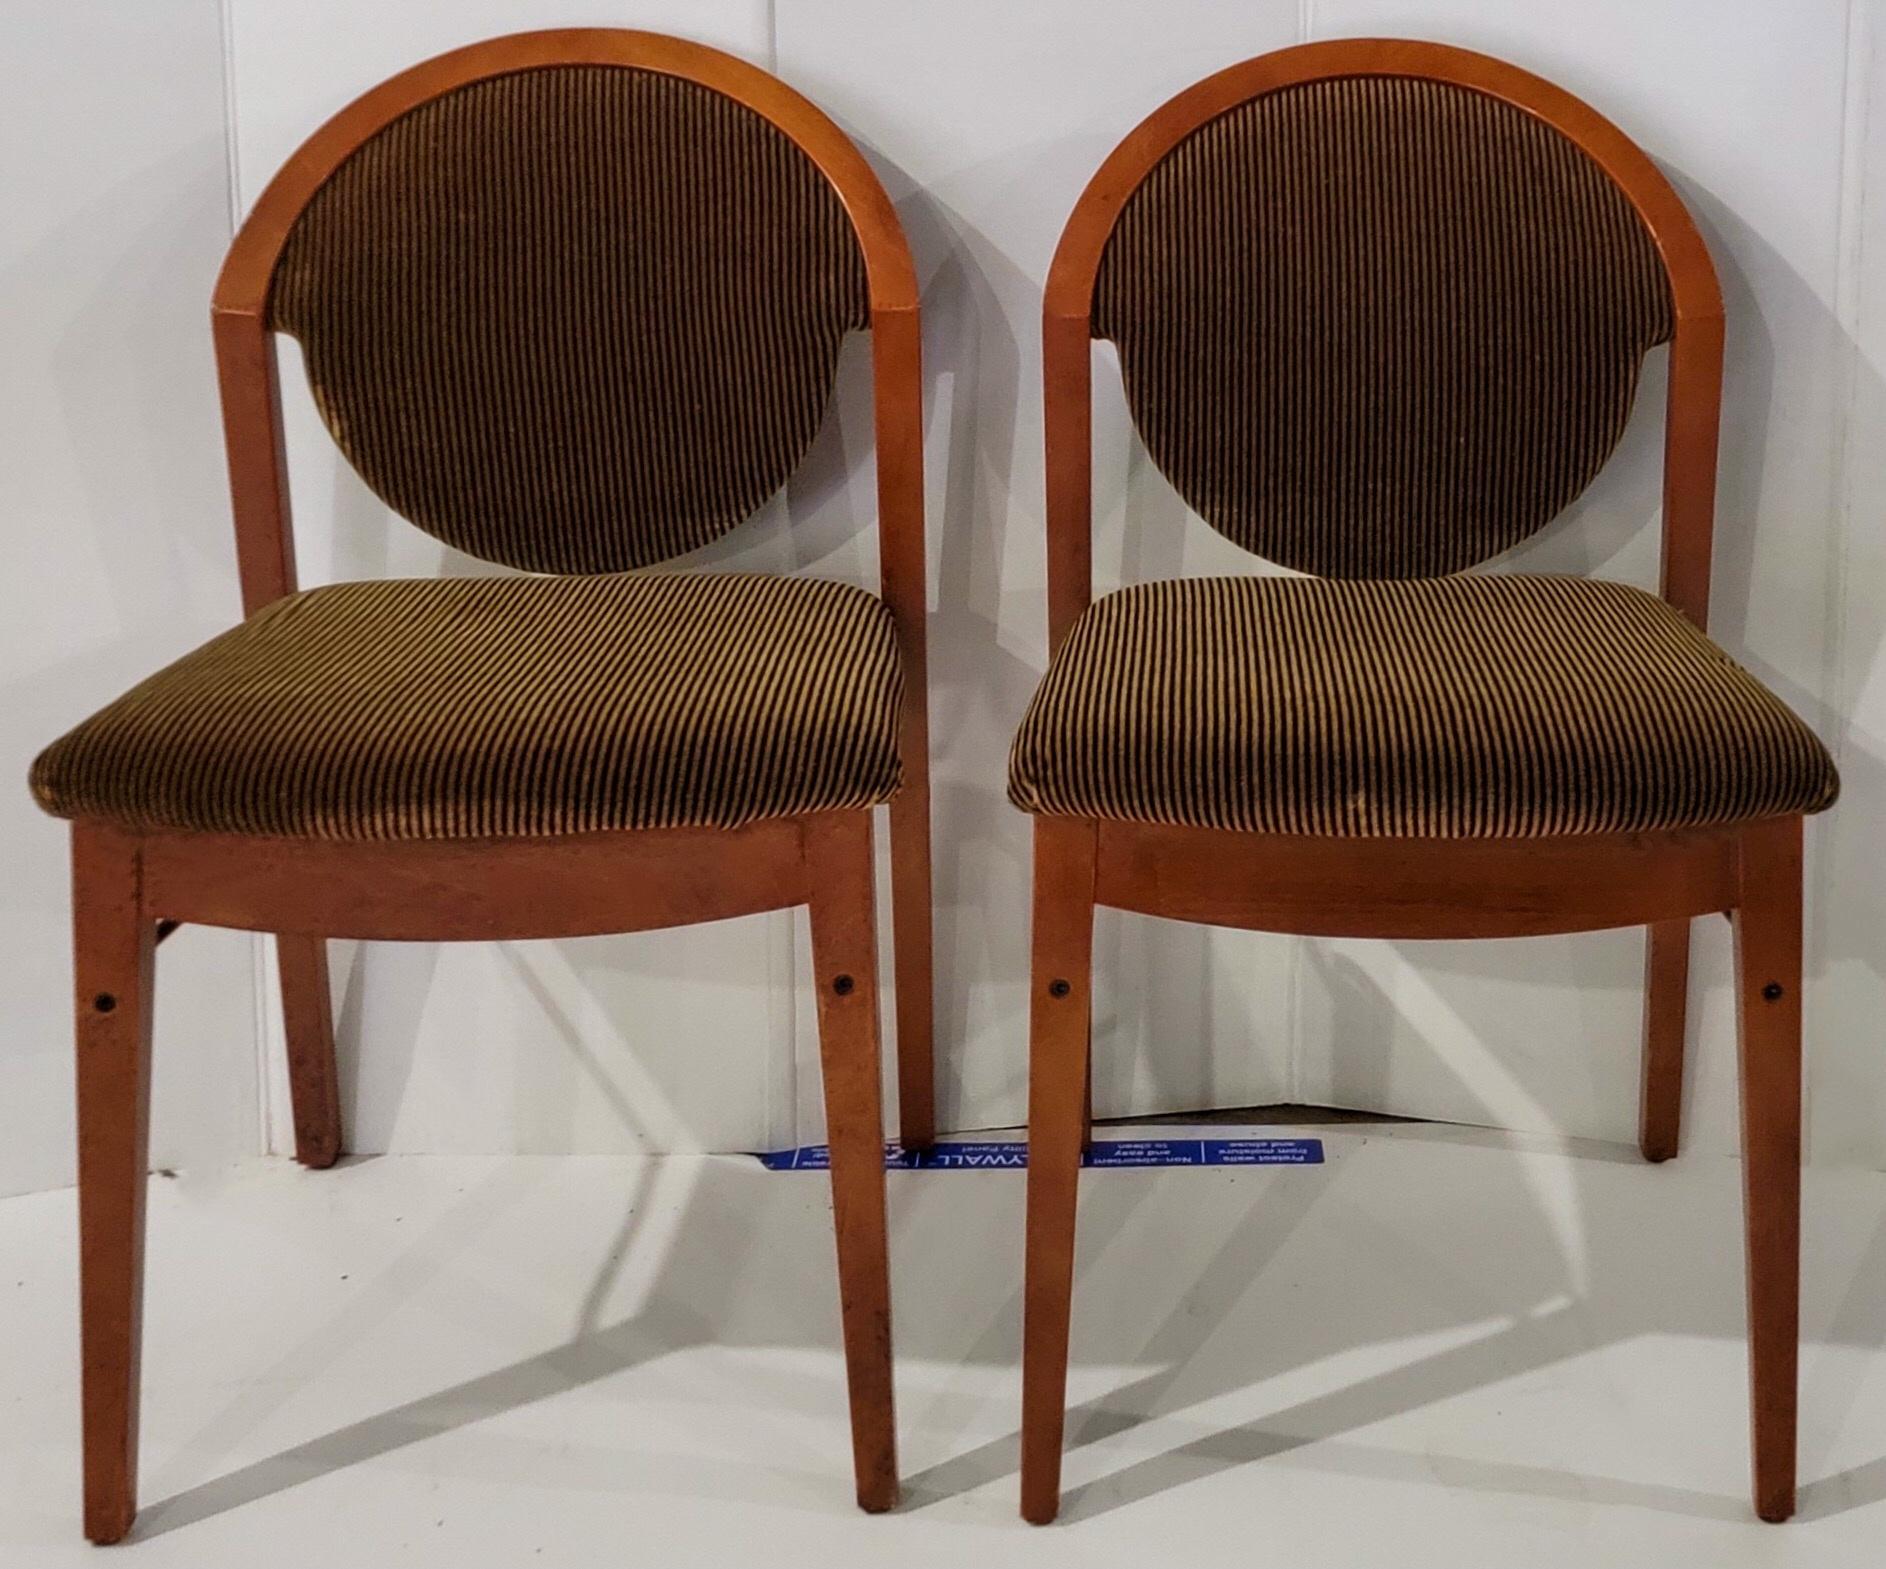 20th Century Italian Modern Burl Walnut Side Chairs By Colber International-Set of 4 